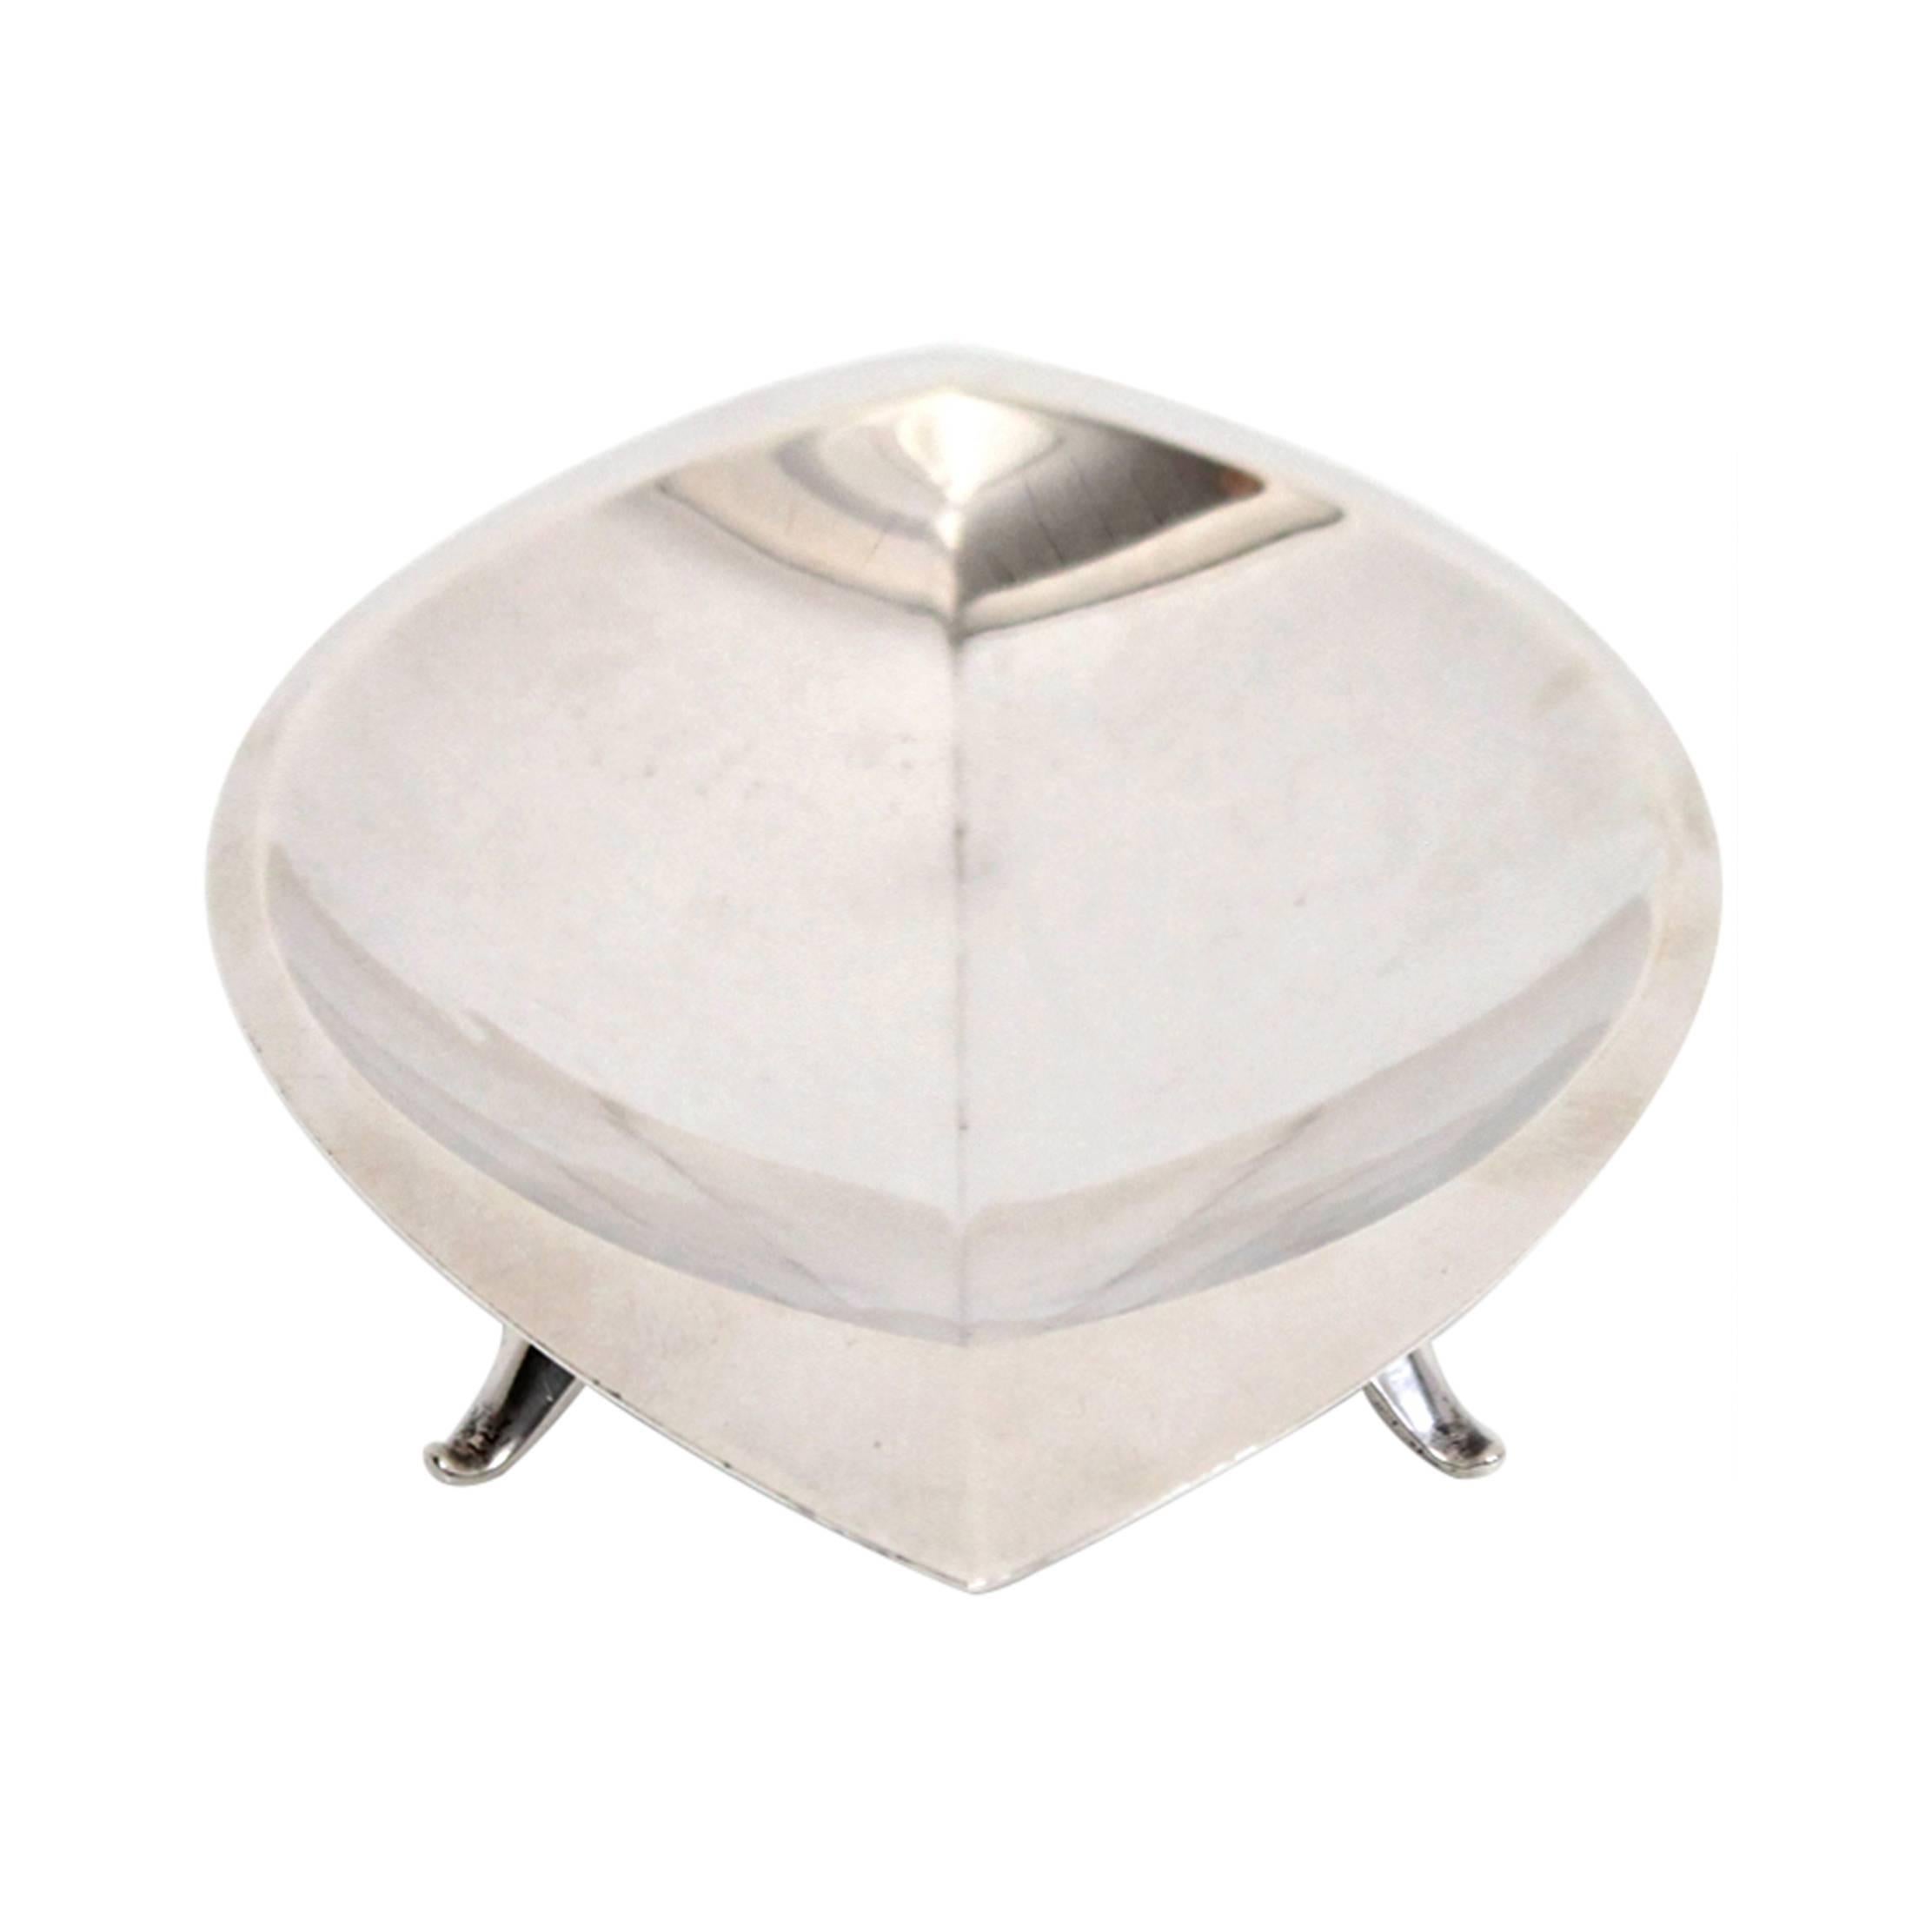 Modernist Sterling Silver Bowl by Tiffany